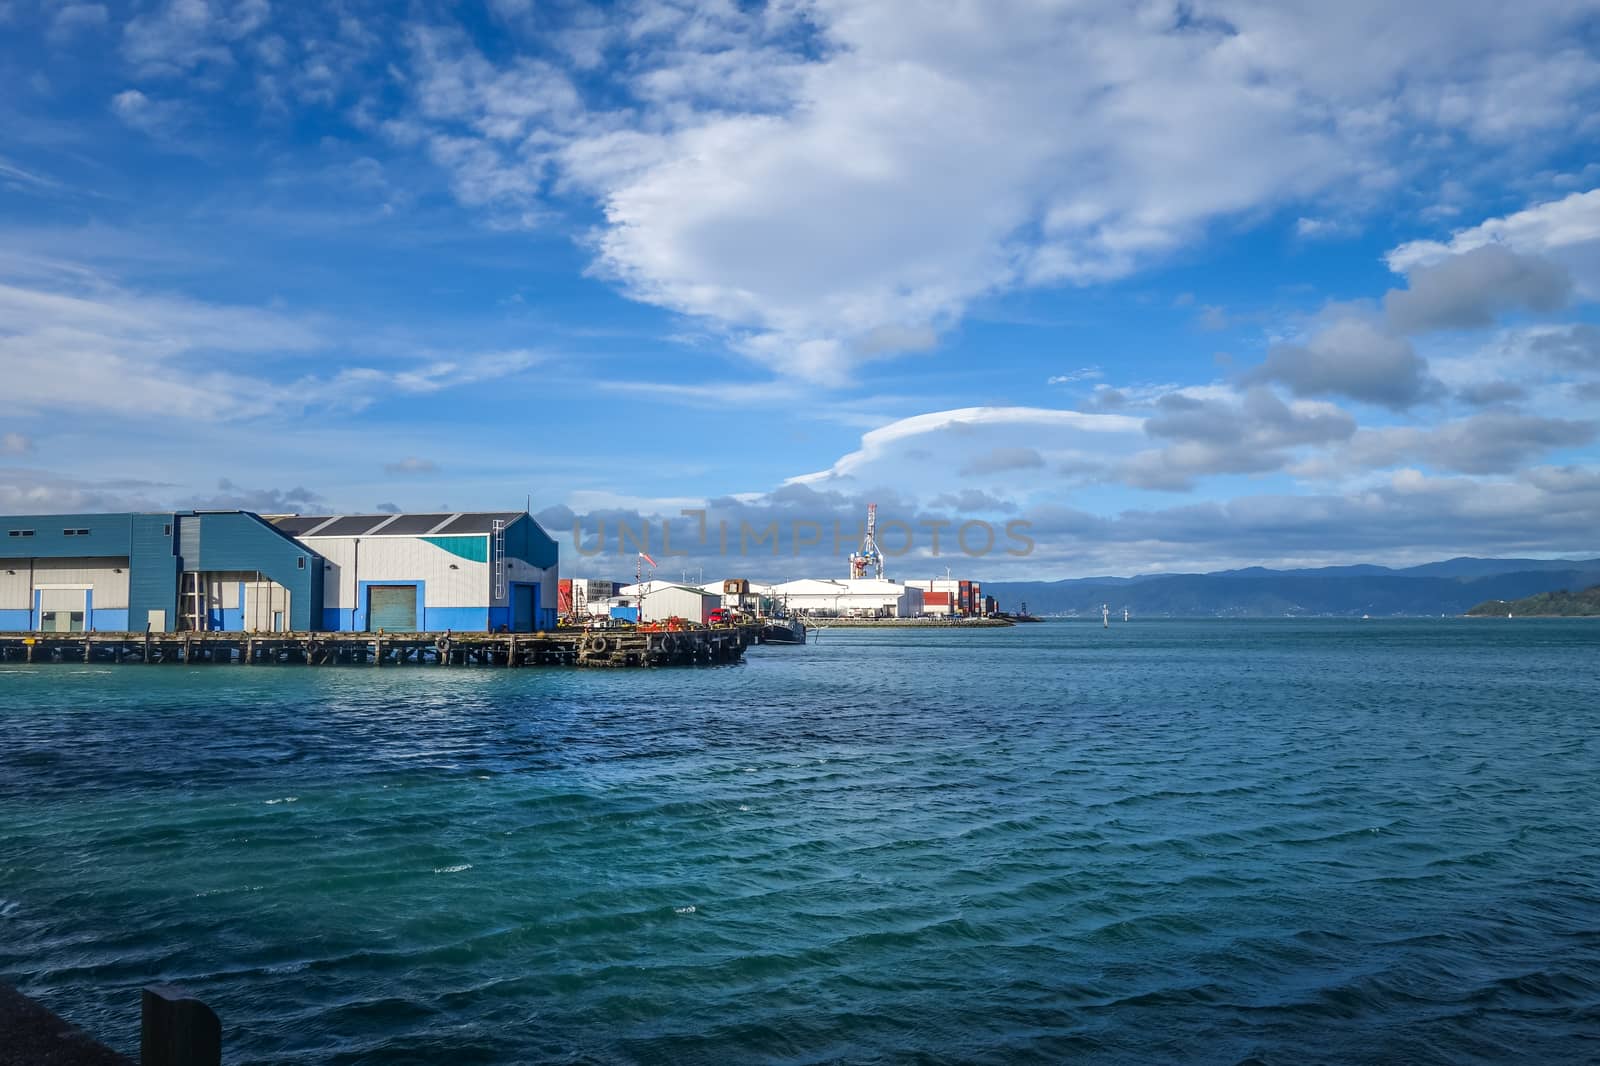 Wellington harbour docks, New Zealand by daboost